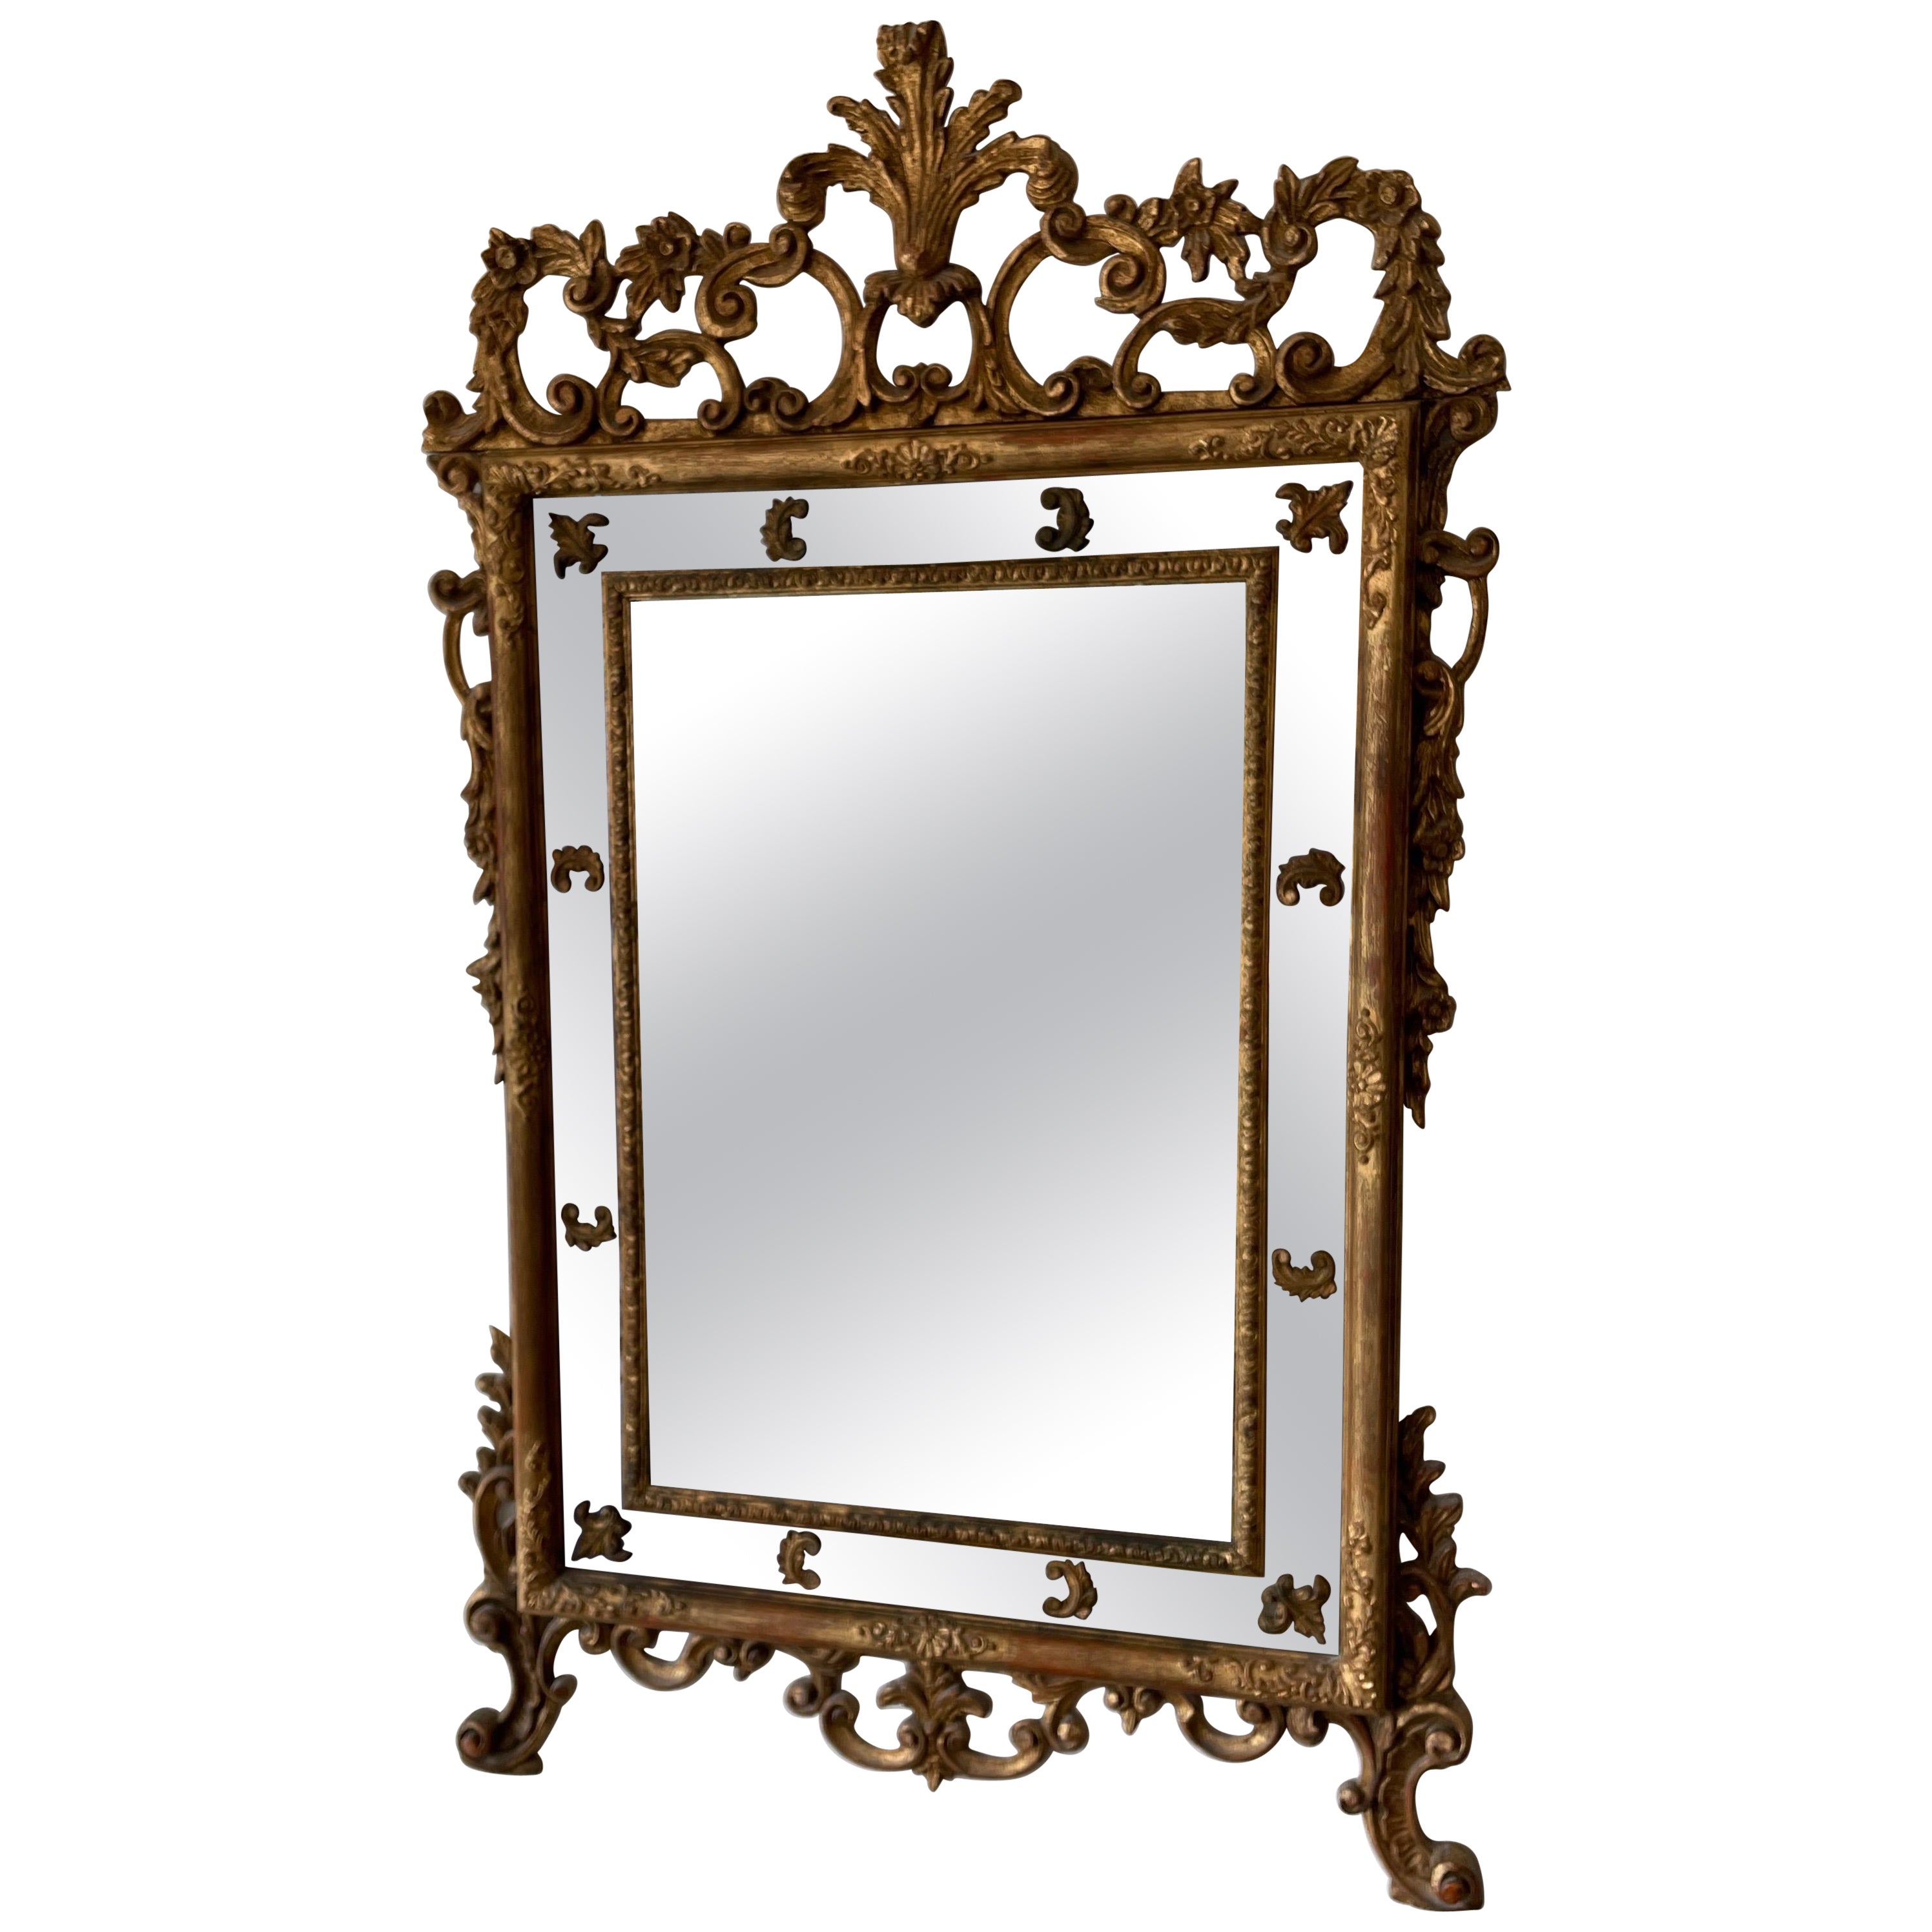 Grand miroir rocococo italien sculpté et doré en vente